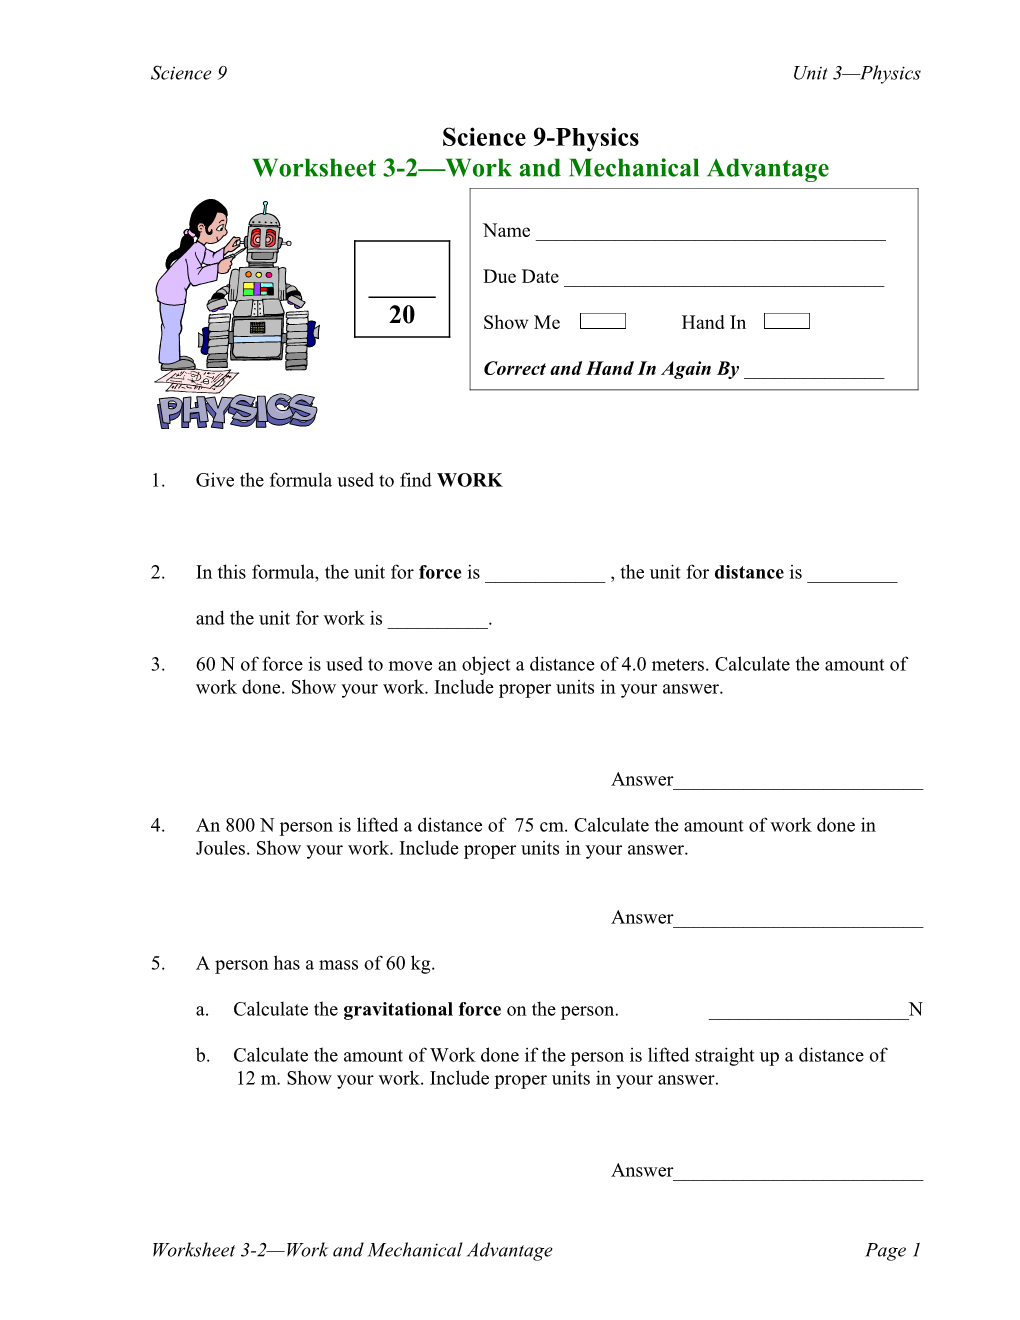 Worksheet 3-2 Work and Mechanical Advantage